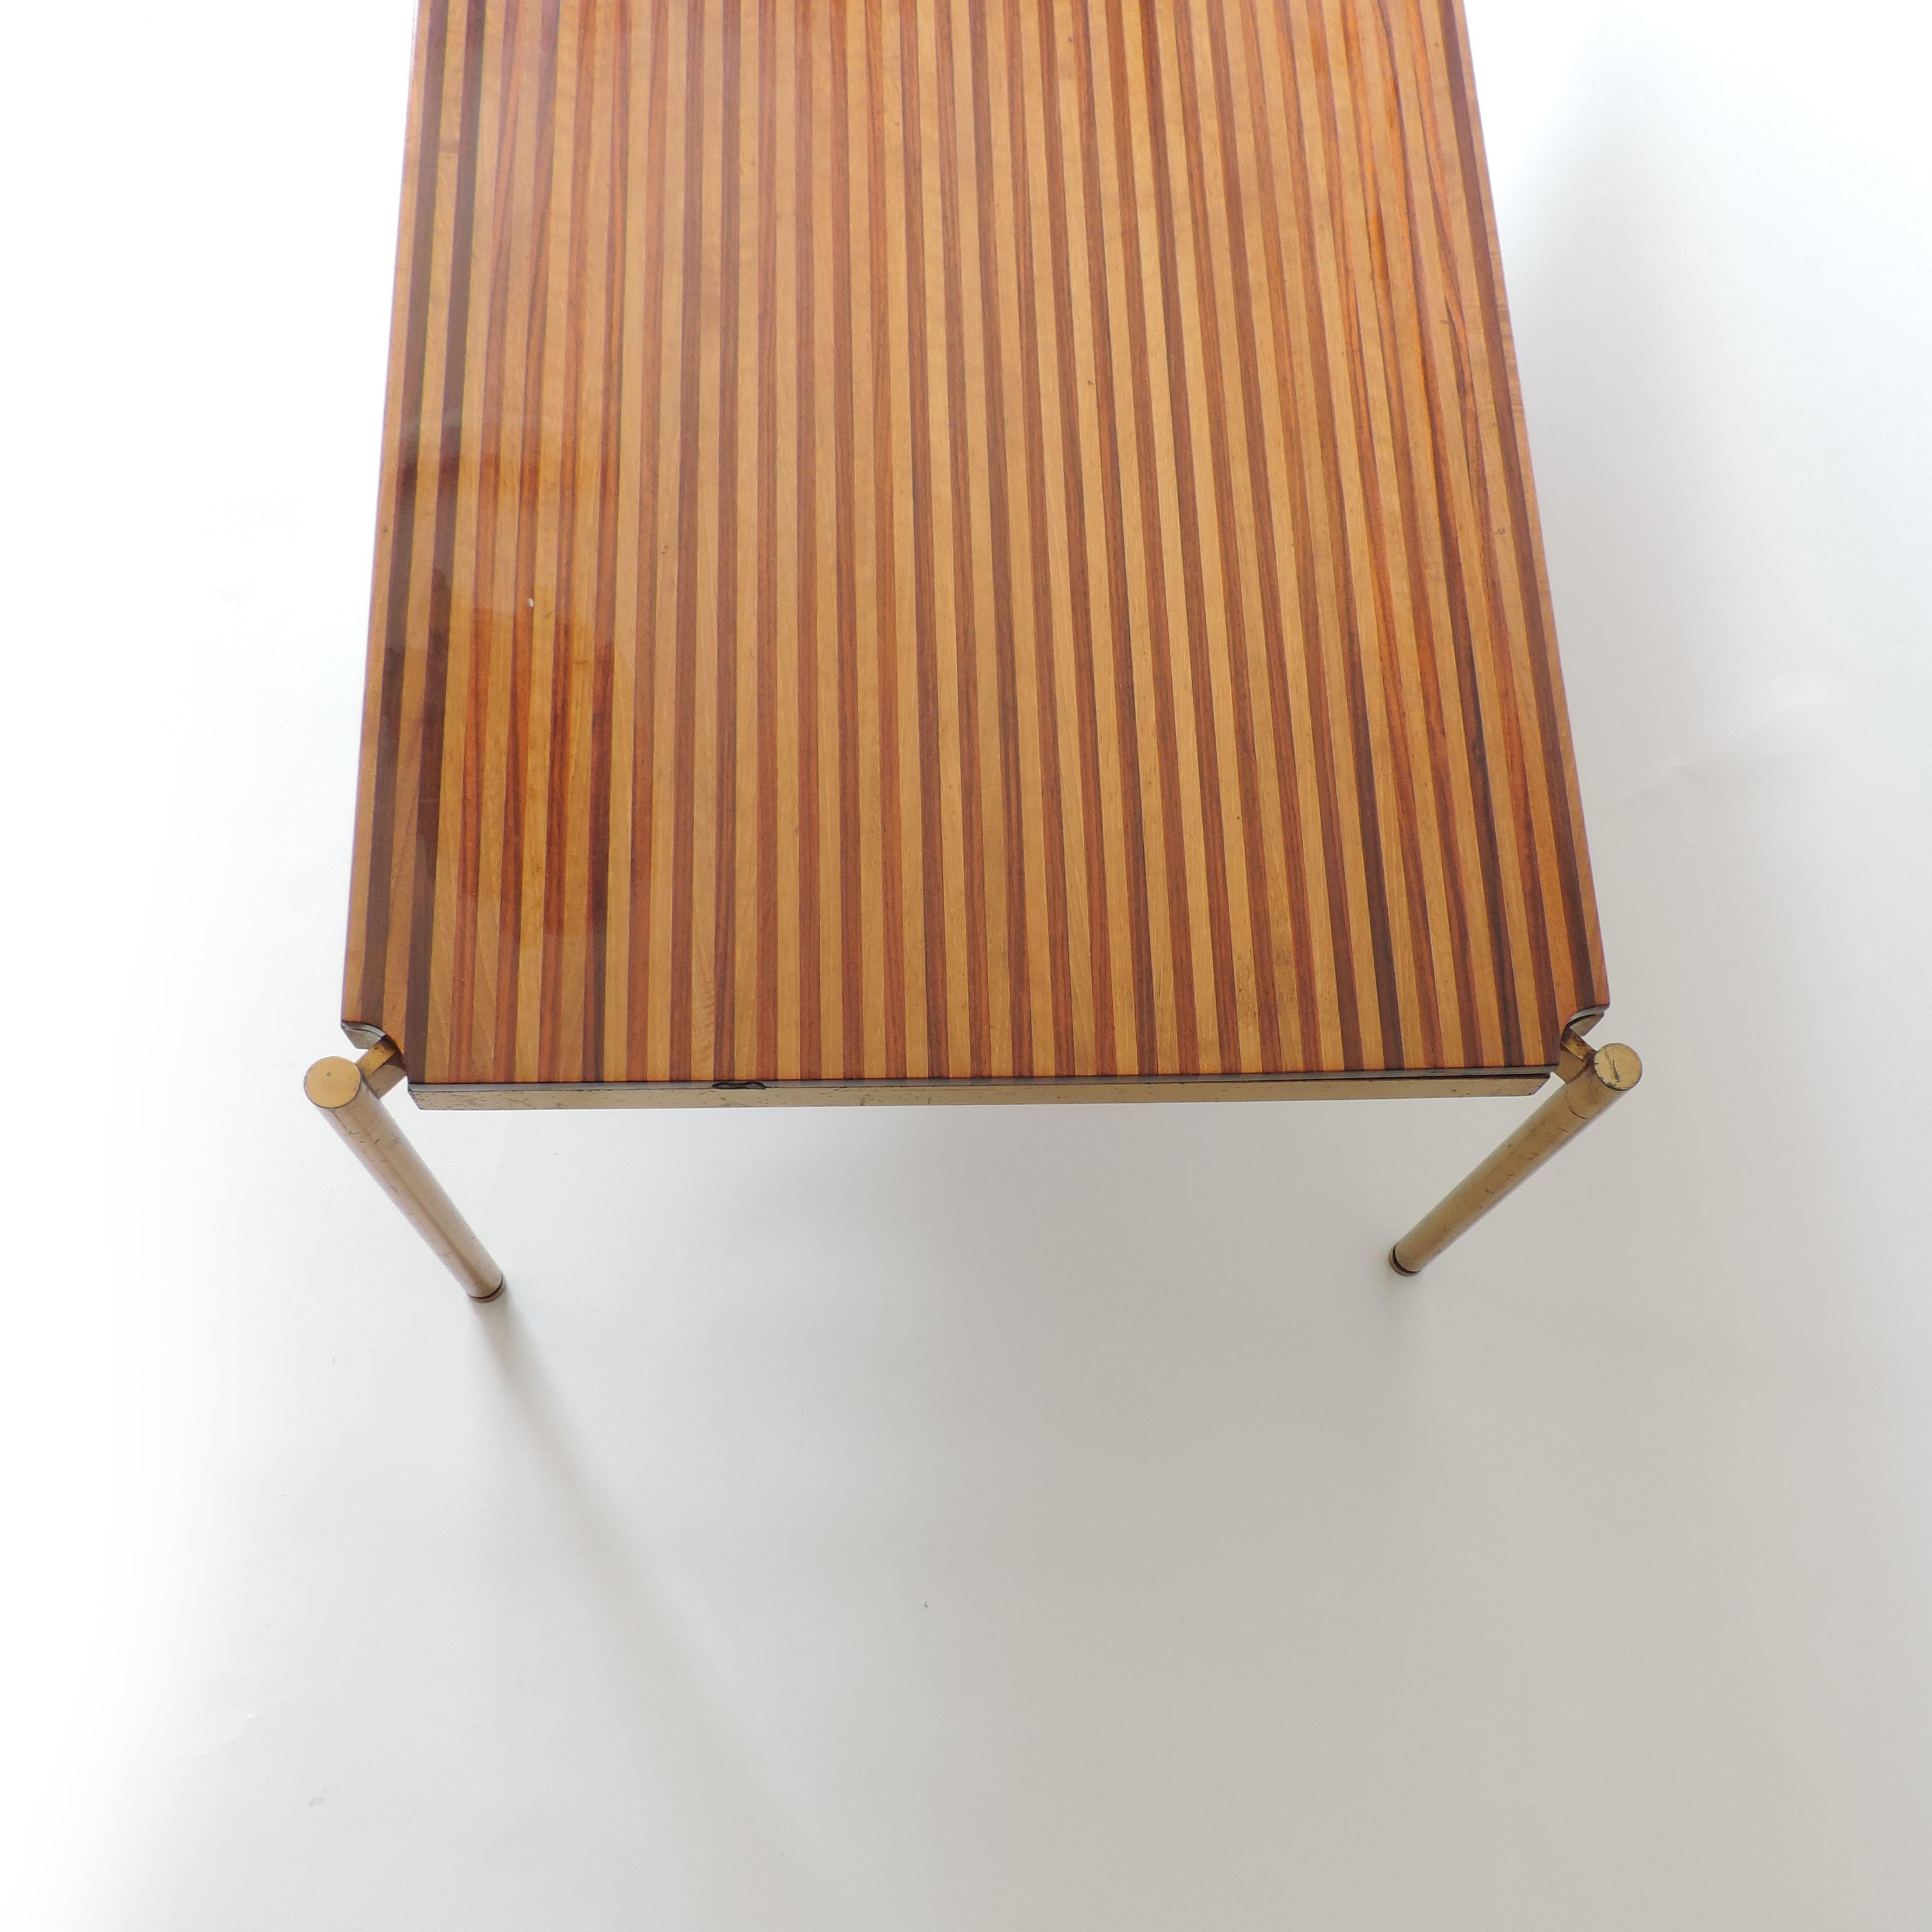 Osvaldo Borsani wooden stripes top and brass coffee table for Tecno, Italy, 1950s.